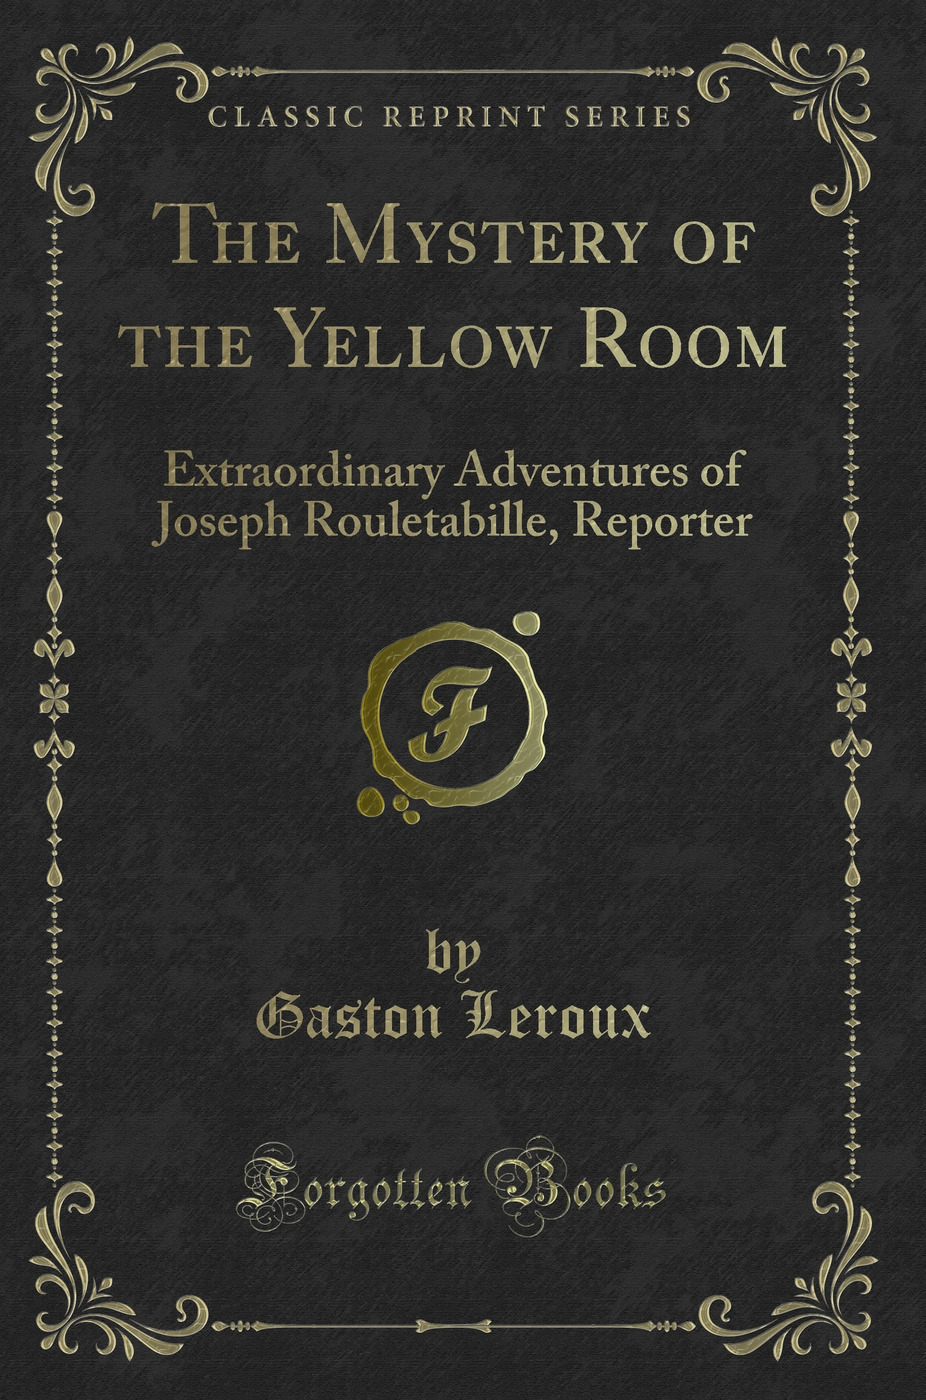 The Mystery of the Yellow Room: Extraordinary Adventures of Joseph Rouletabille - Gaston Leroux